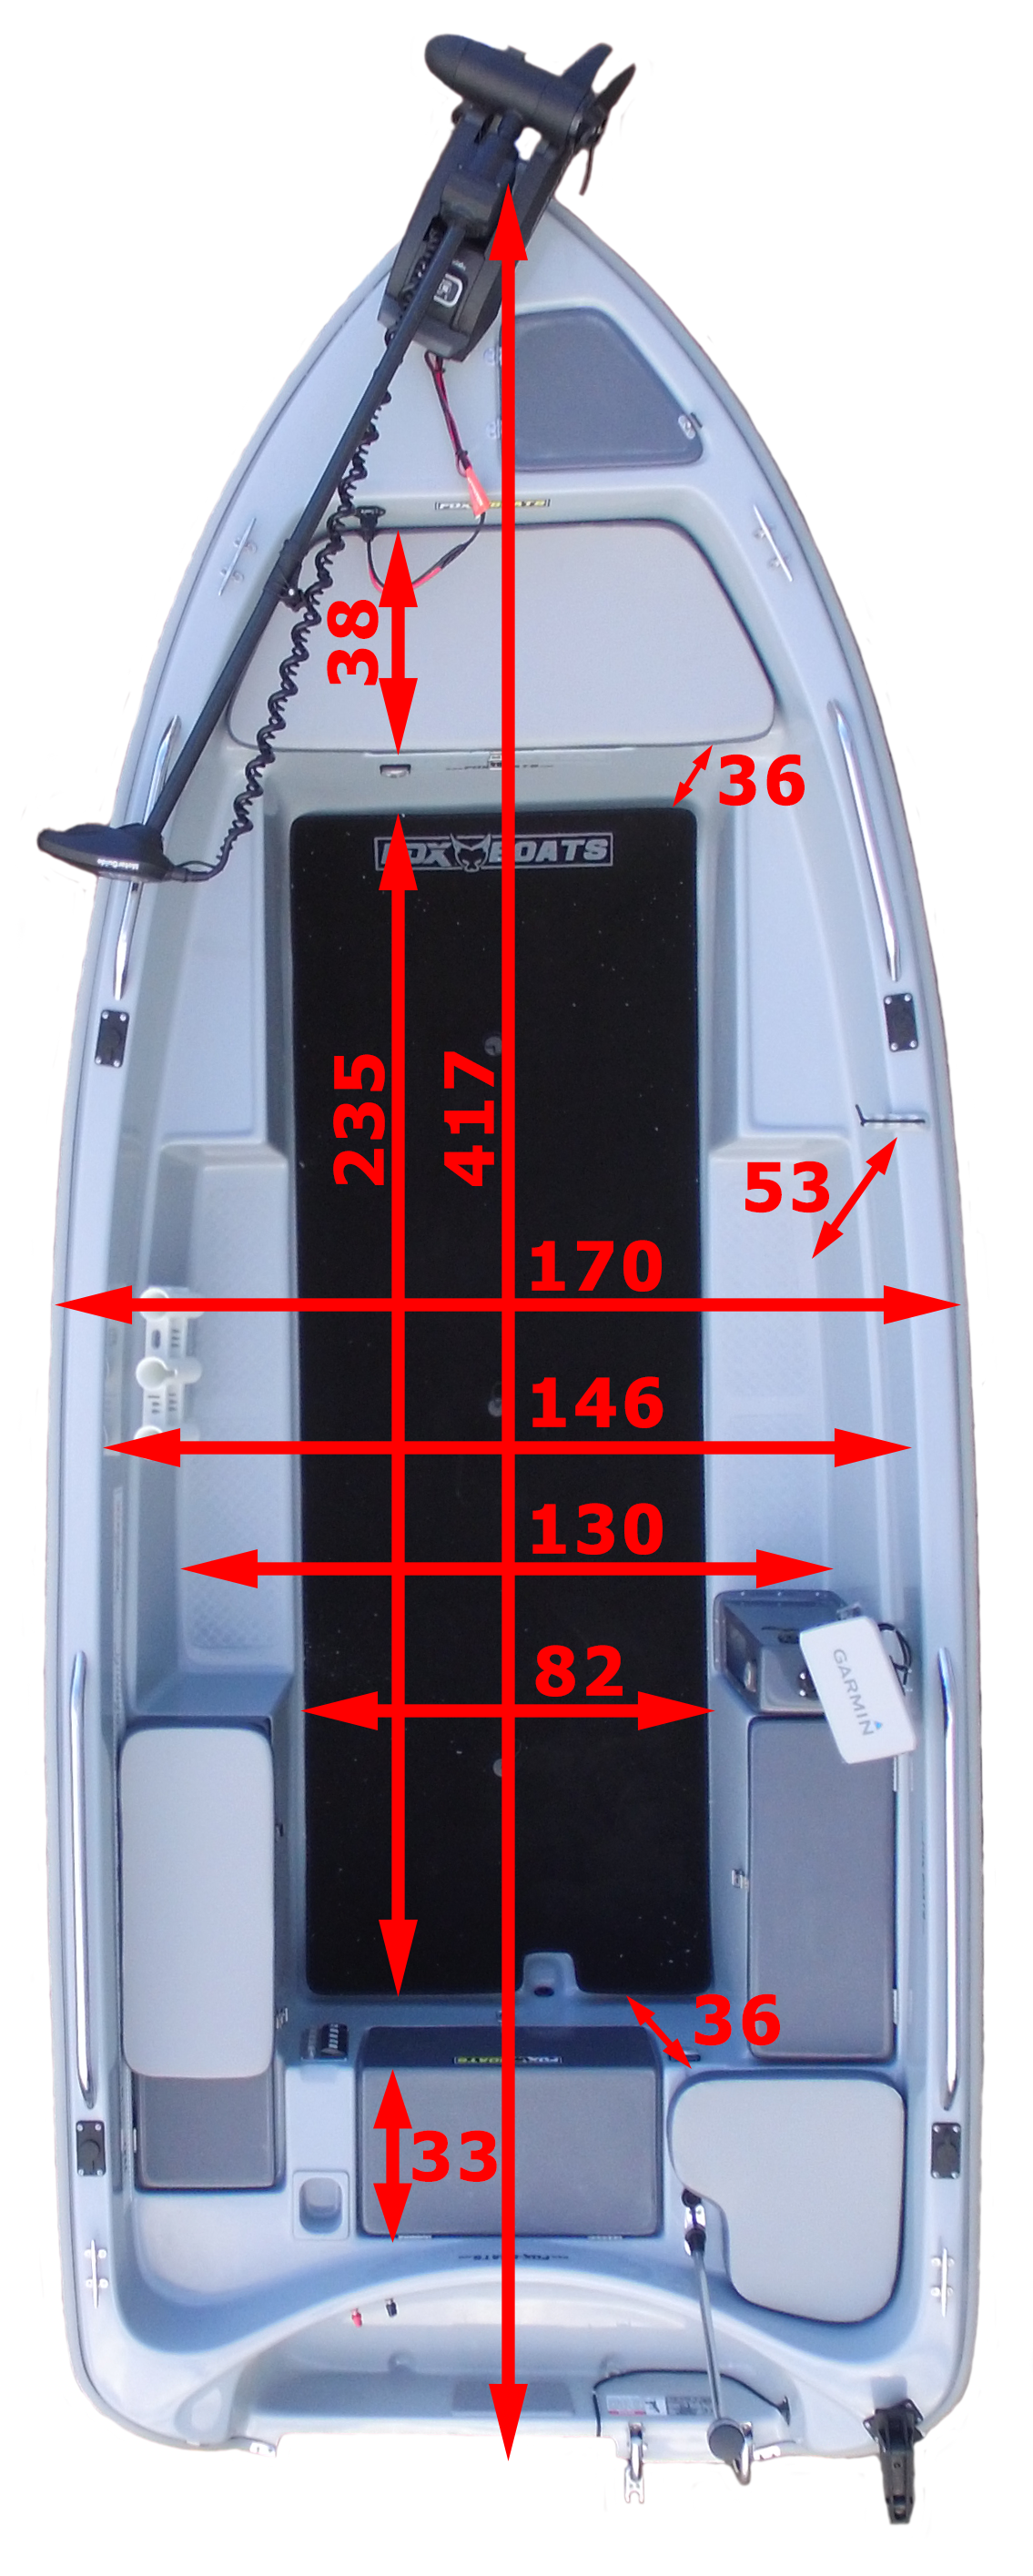 łódka wędkarska łódź riverfox 420 FOX-BOATS - www.fox-boats.com